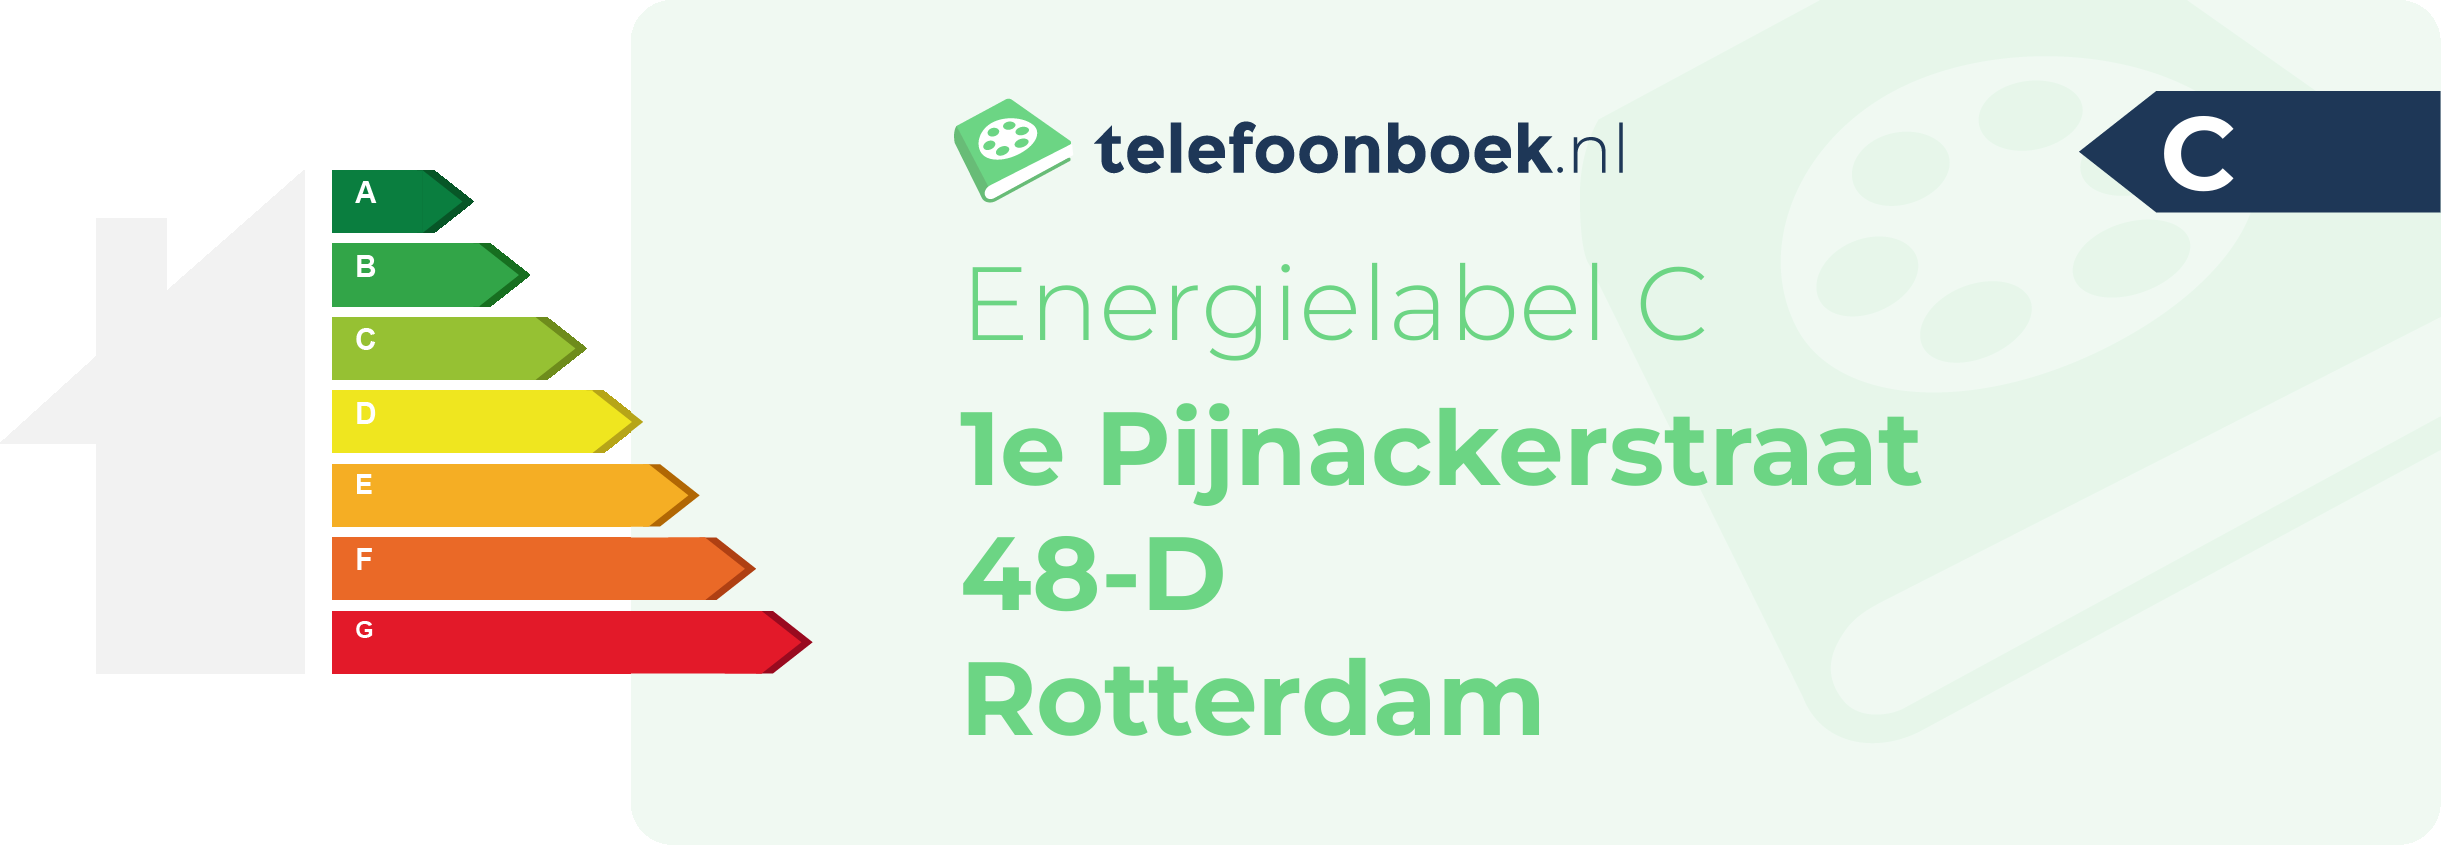 Energielabel 1e Pijnackerstraat 48-D Rotterdam